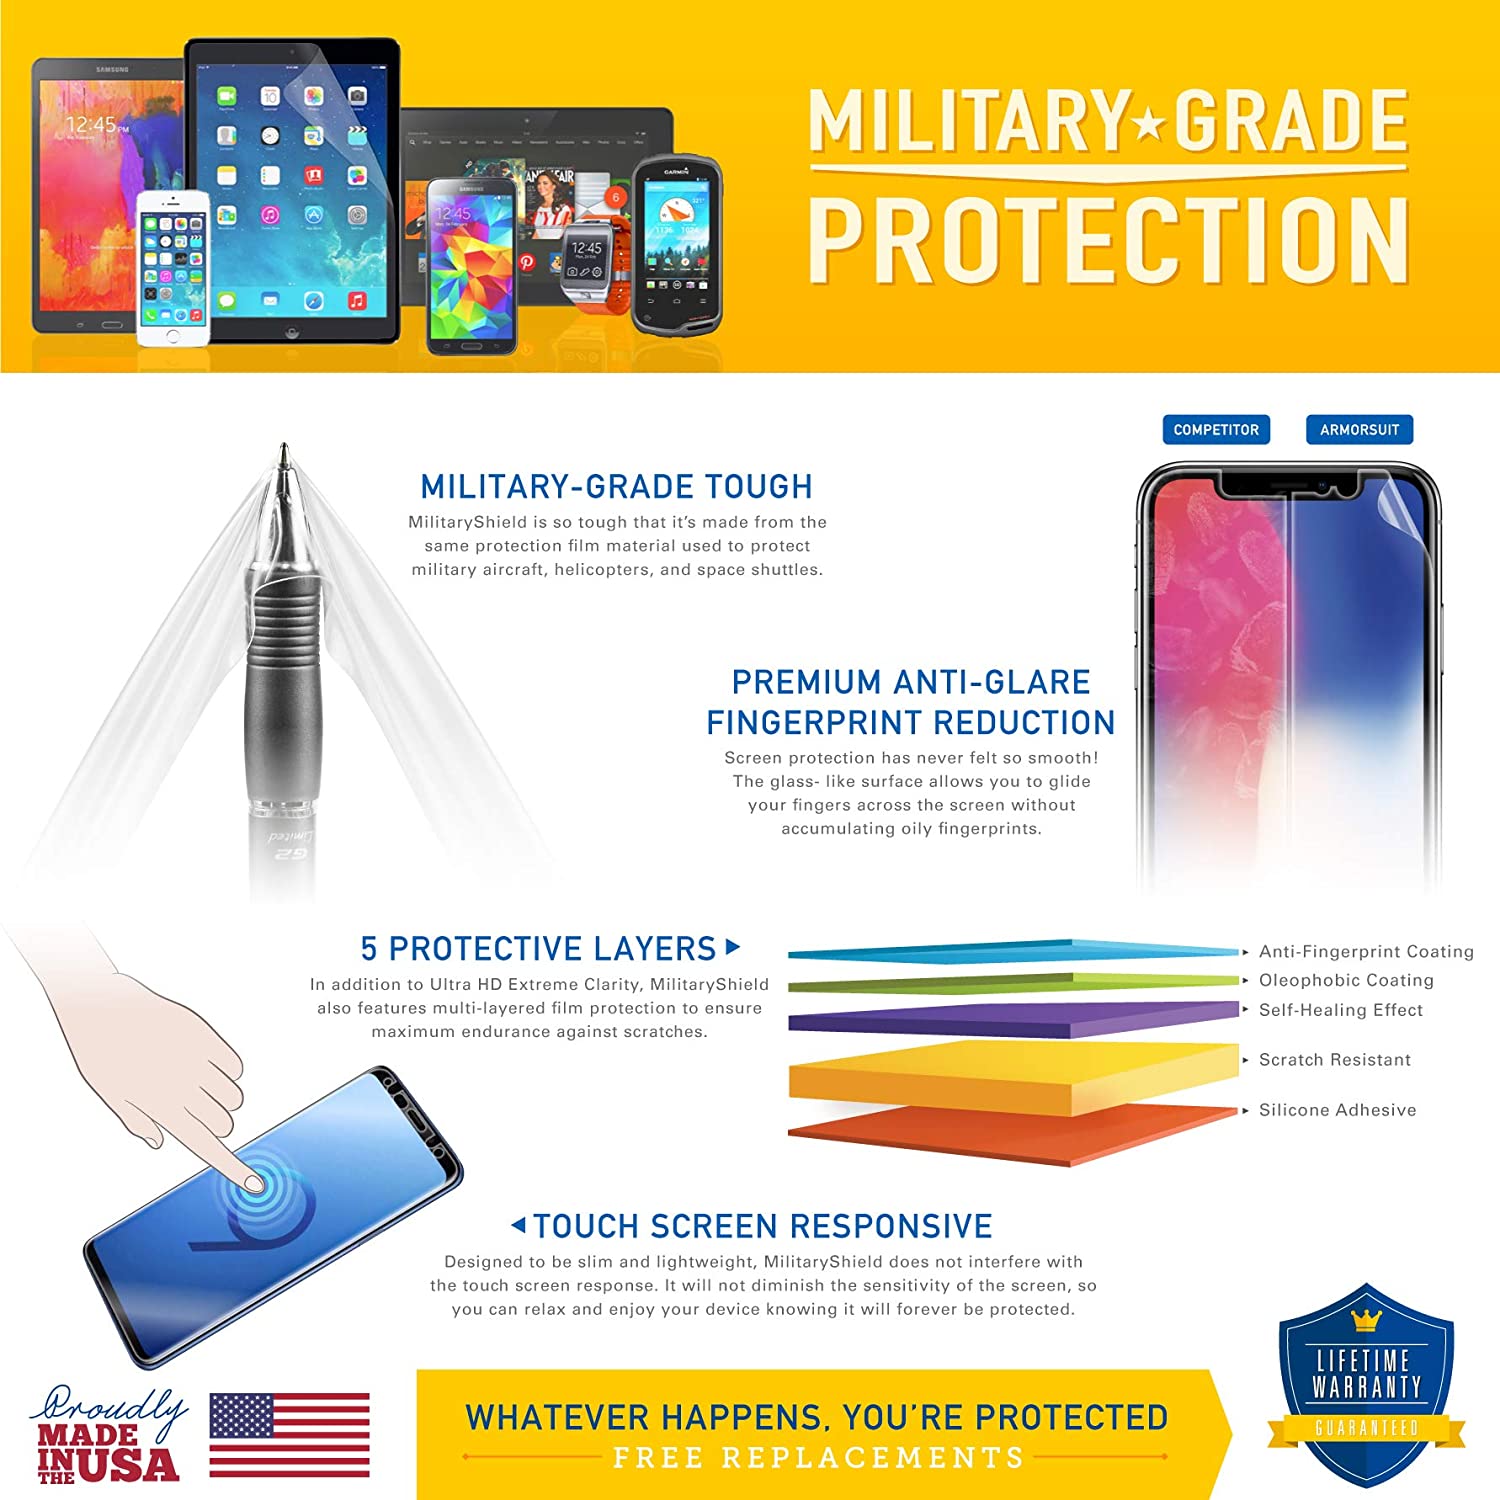 Samsung Galaxy S2/SII (International) Full Body Skin Protector